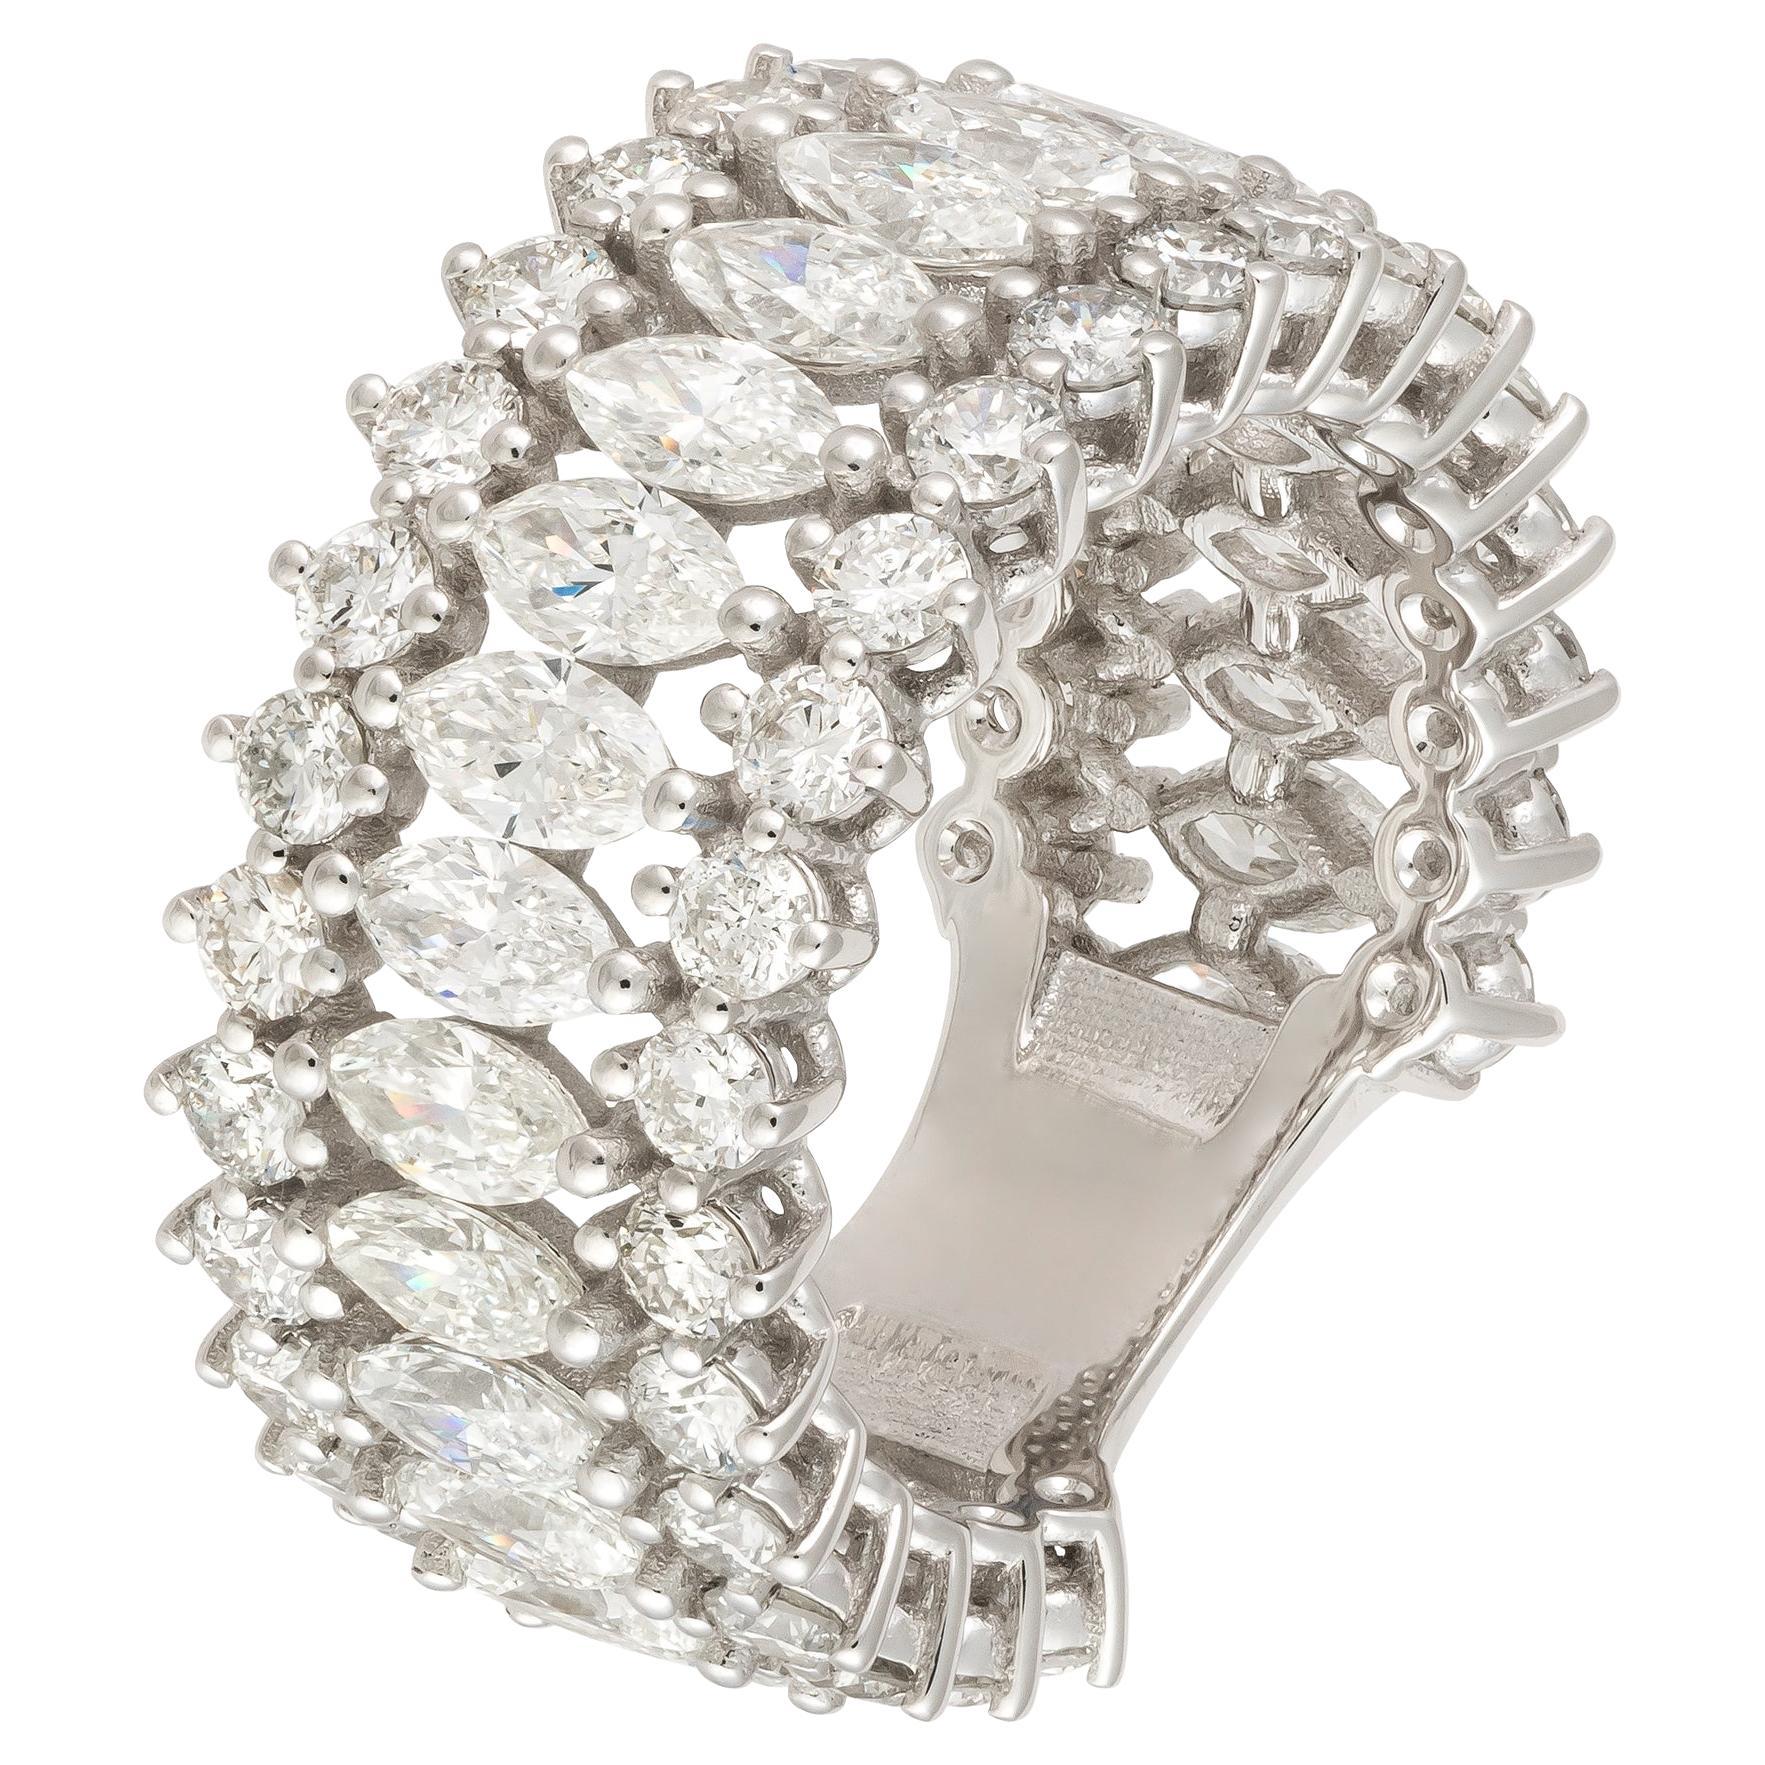 For Sale:  Unique White 18K Gold White Diamond Ring for Her